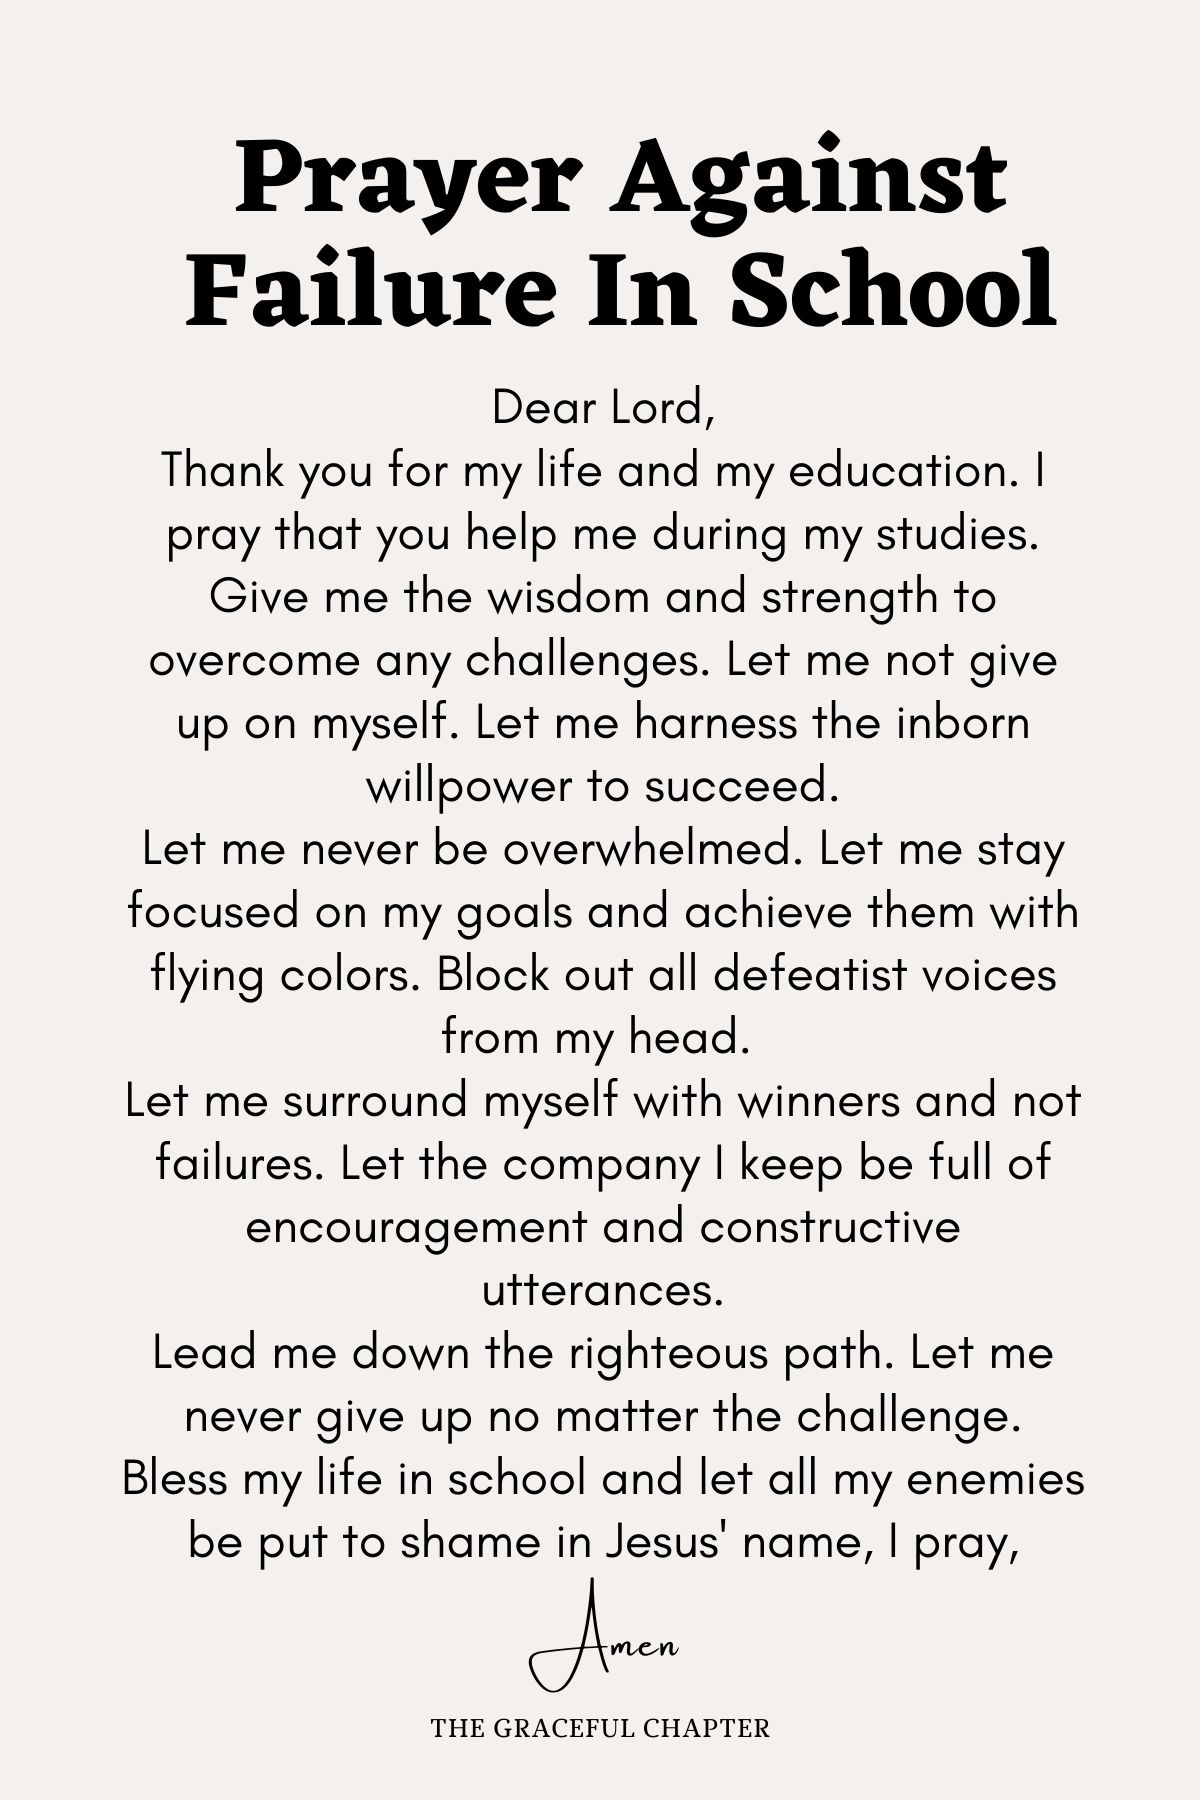 Prayer against failure in school